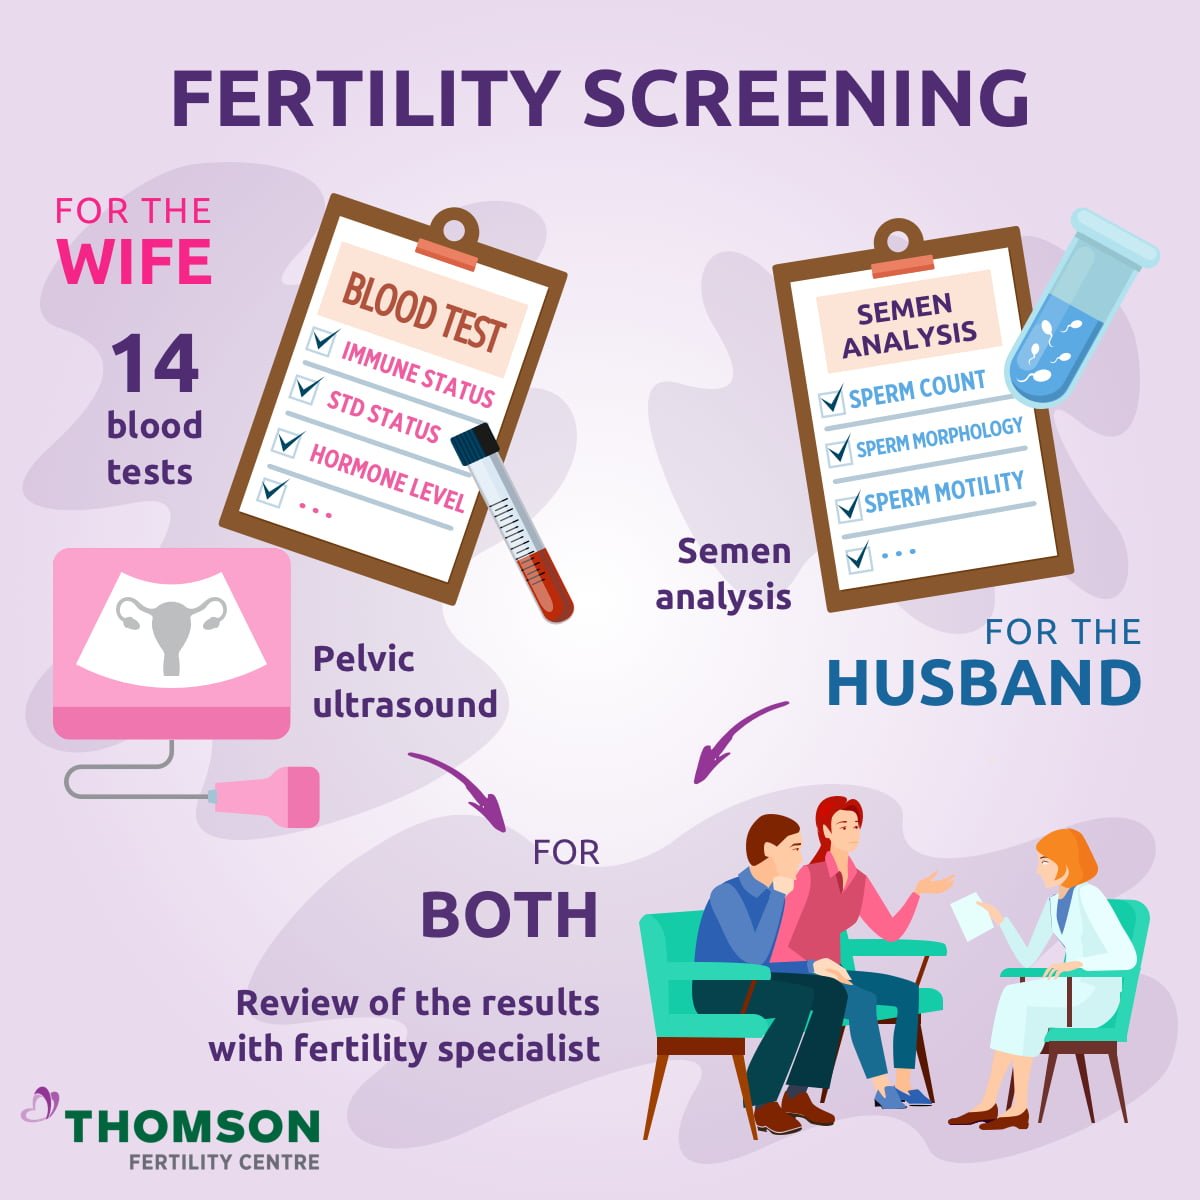 Thomson Fertility Centre - Couple's Fertility Screening